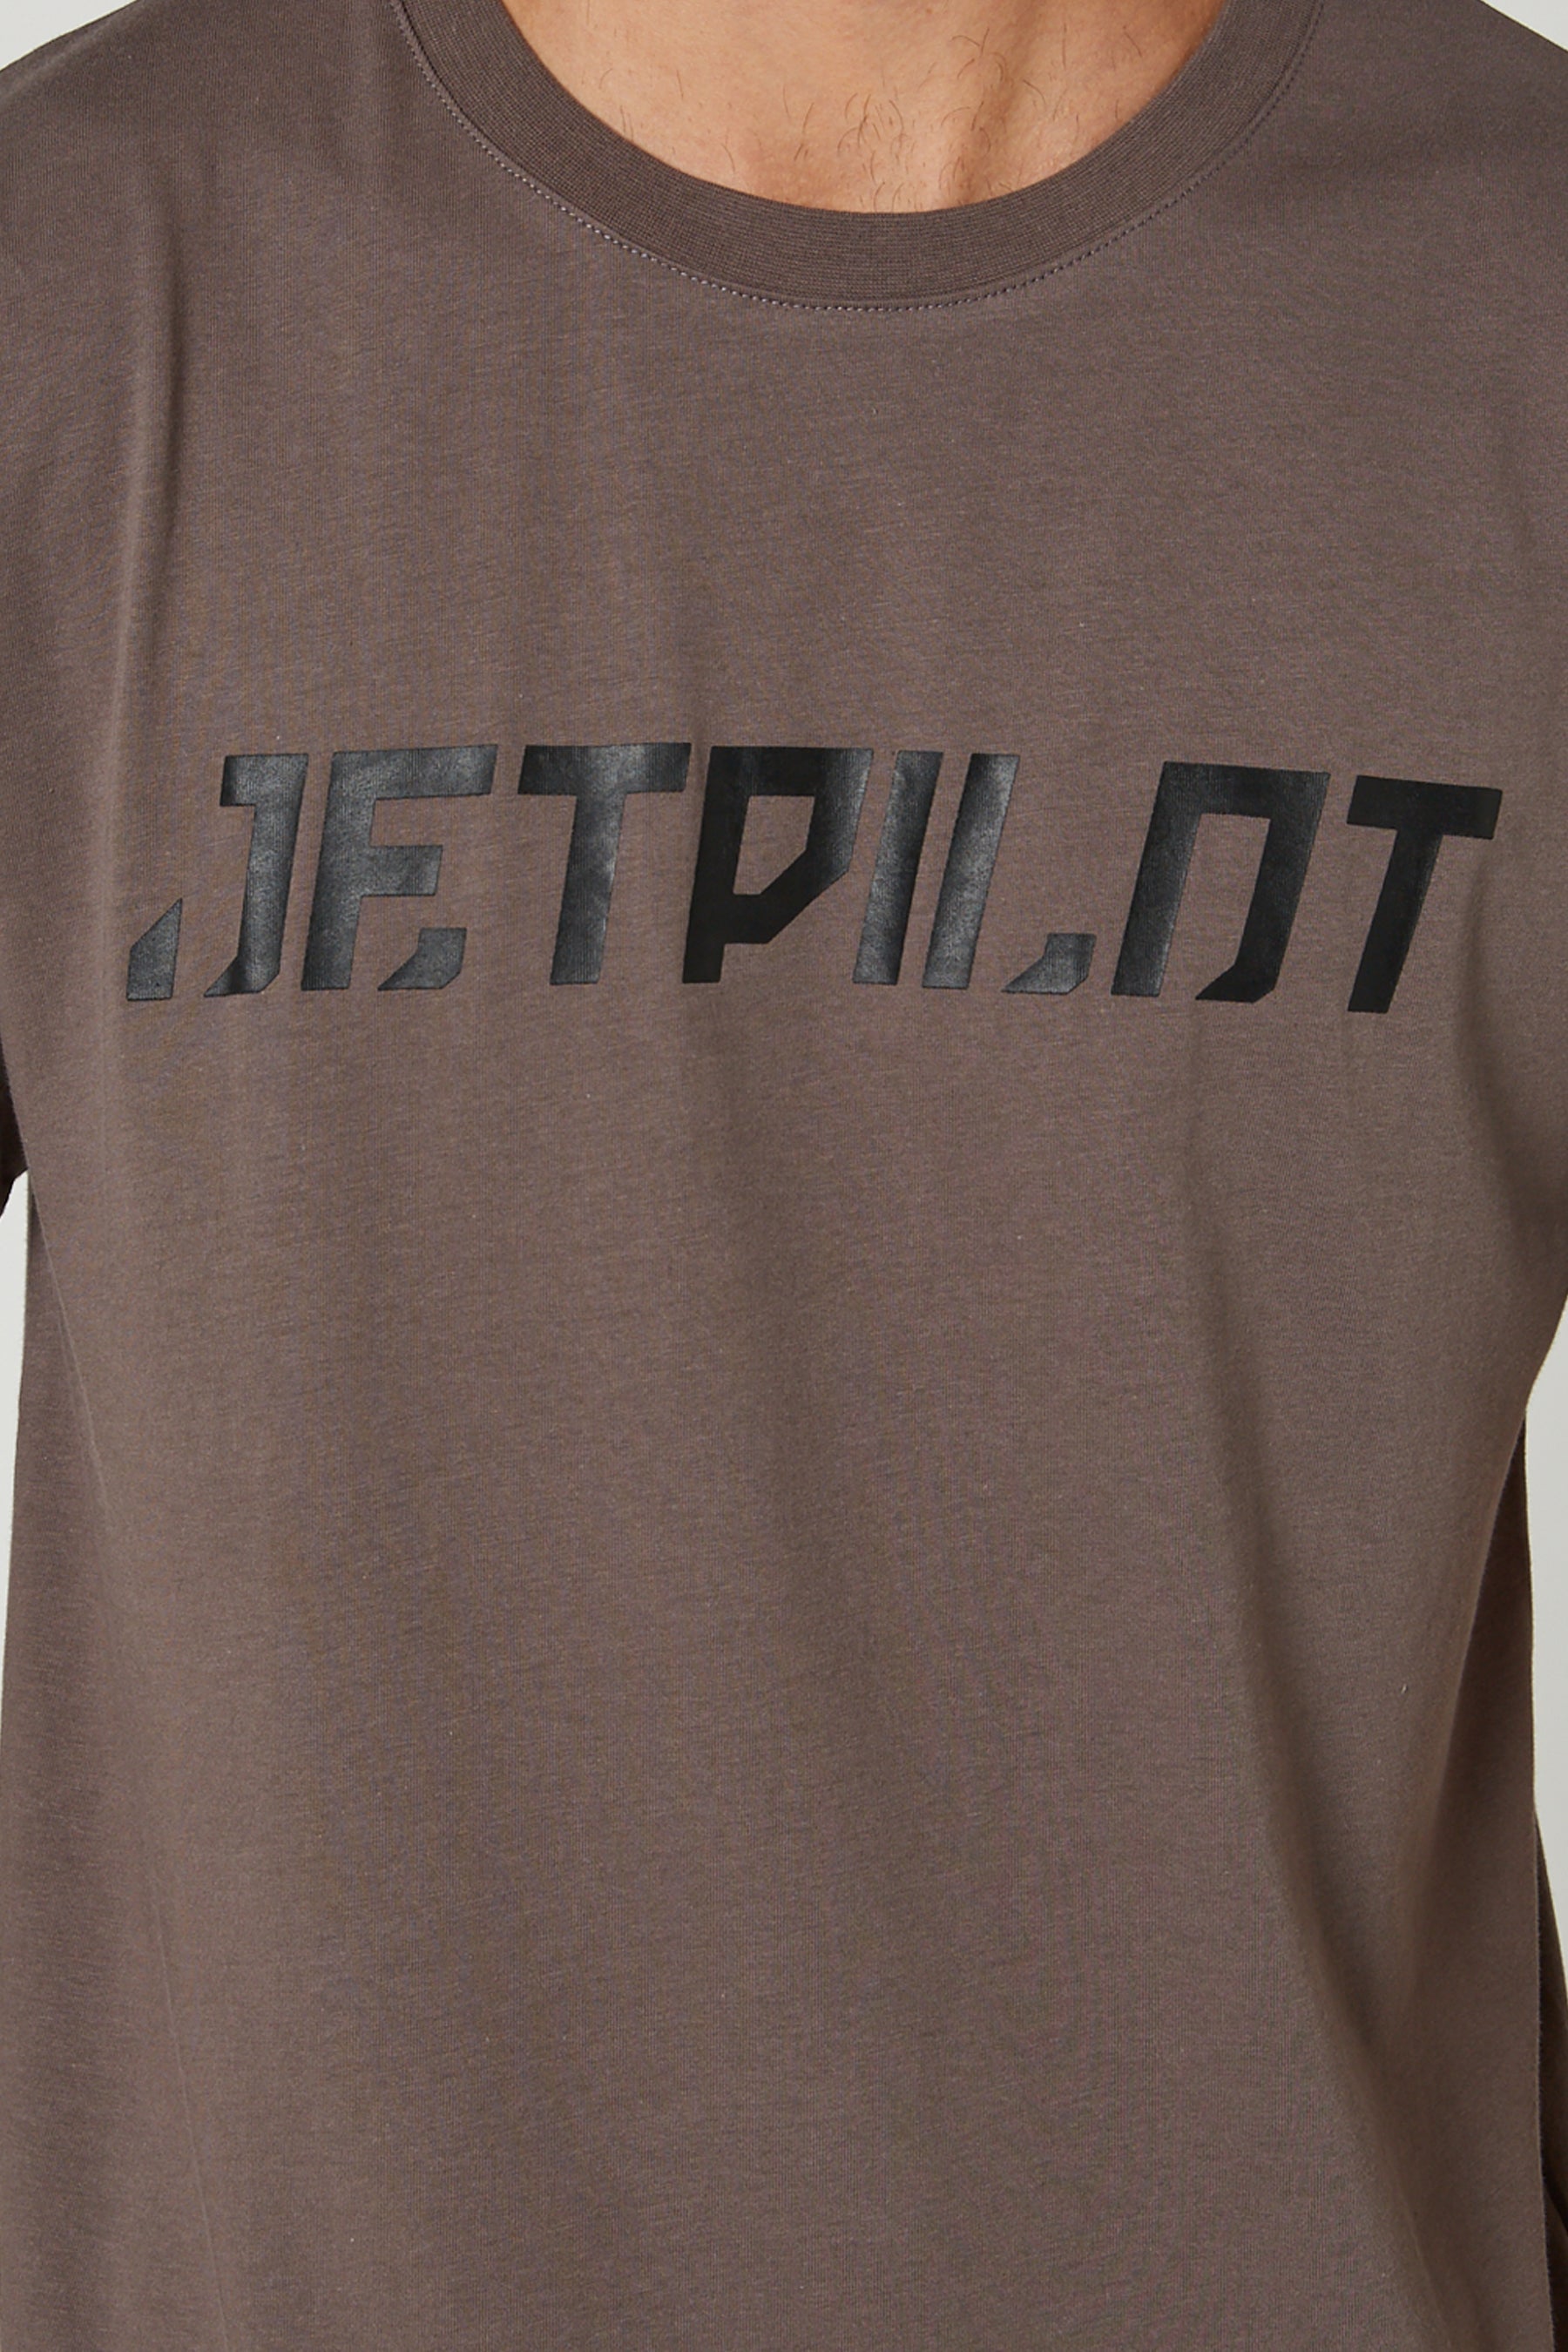 Jetpilot Corp Mens Tee - Coal